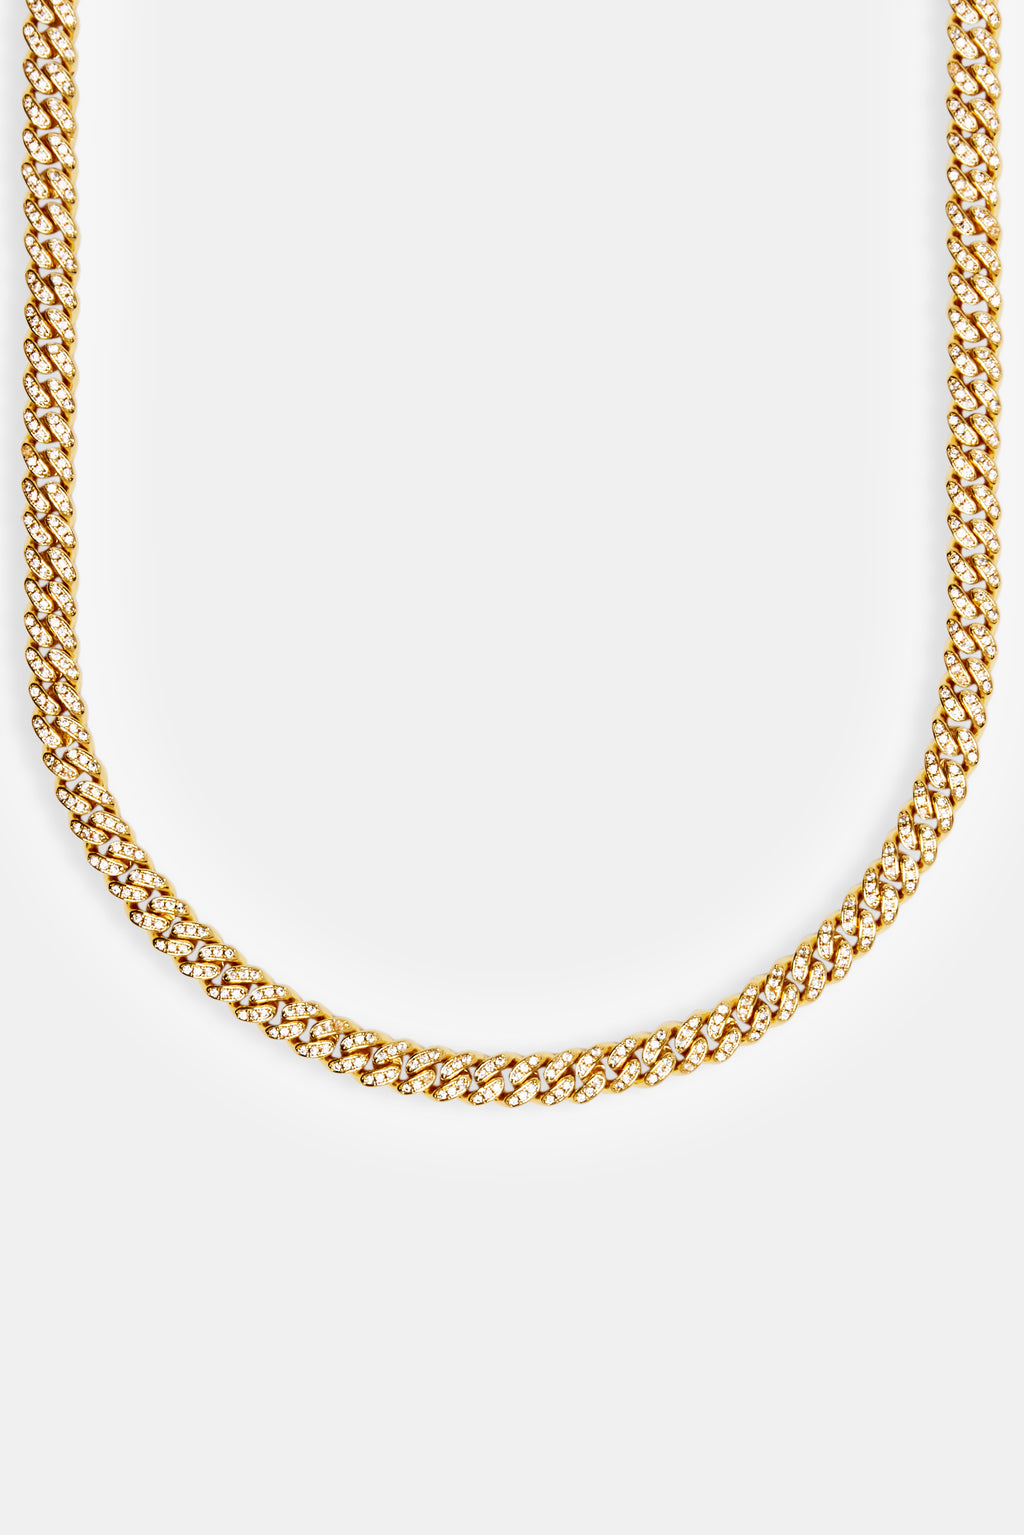 6mm Gold Plated Iced Cuban Chain | Womens Chains | Shop Cuban Chains at ...